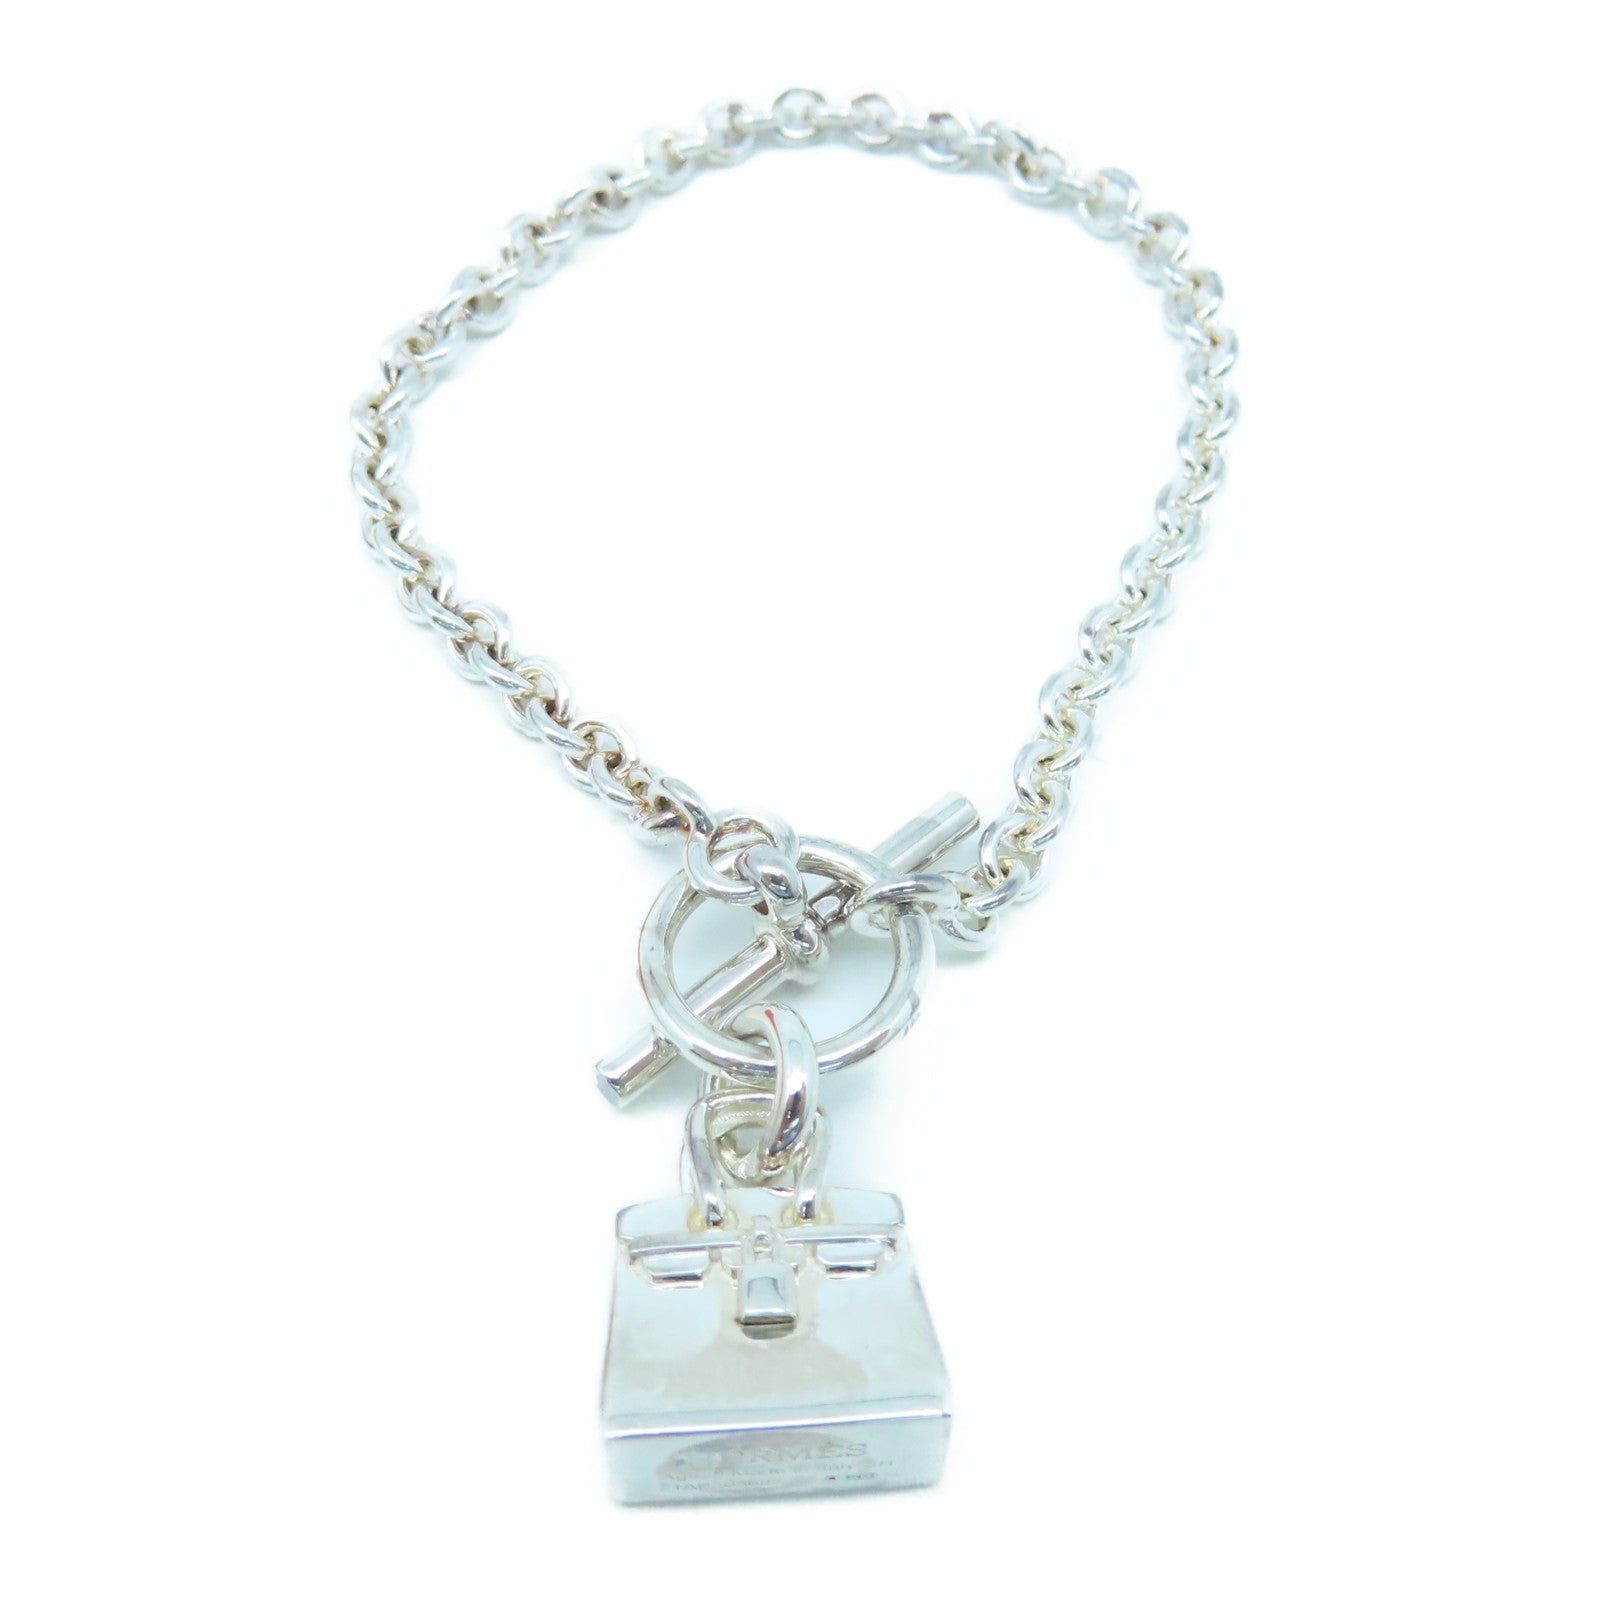 HERMES Sterling Silver Kelly Amulettes Bracelet SH 1228286